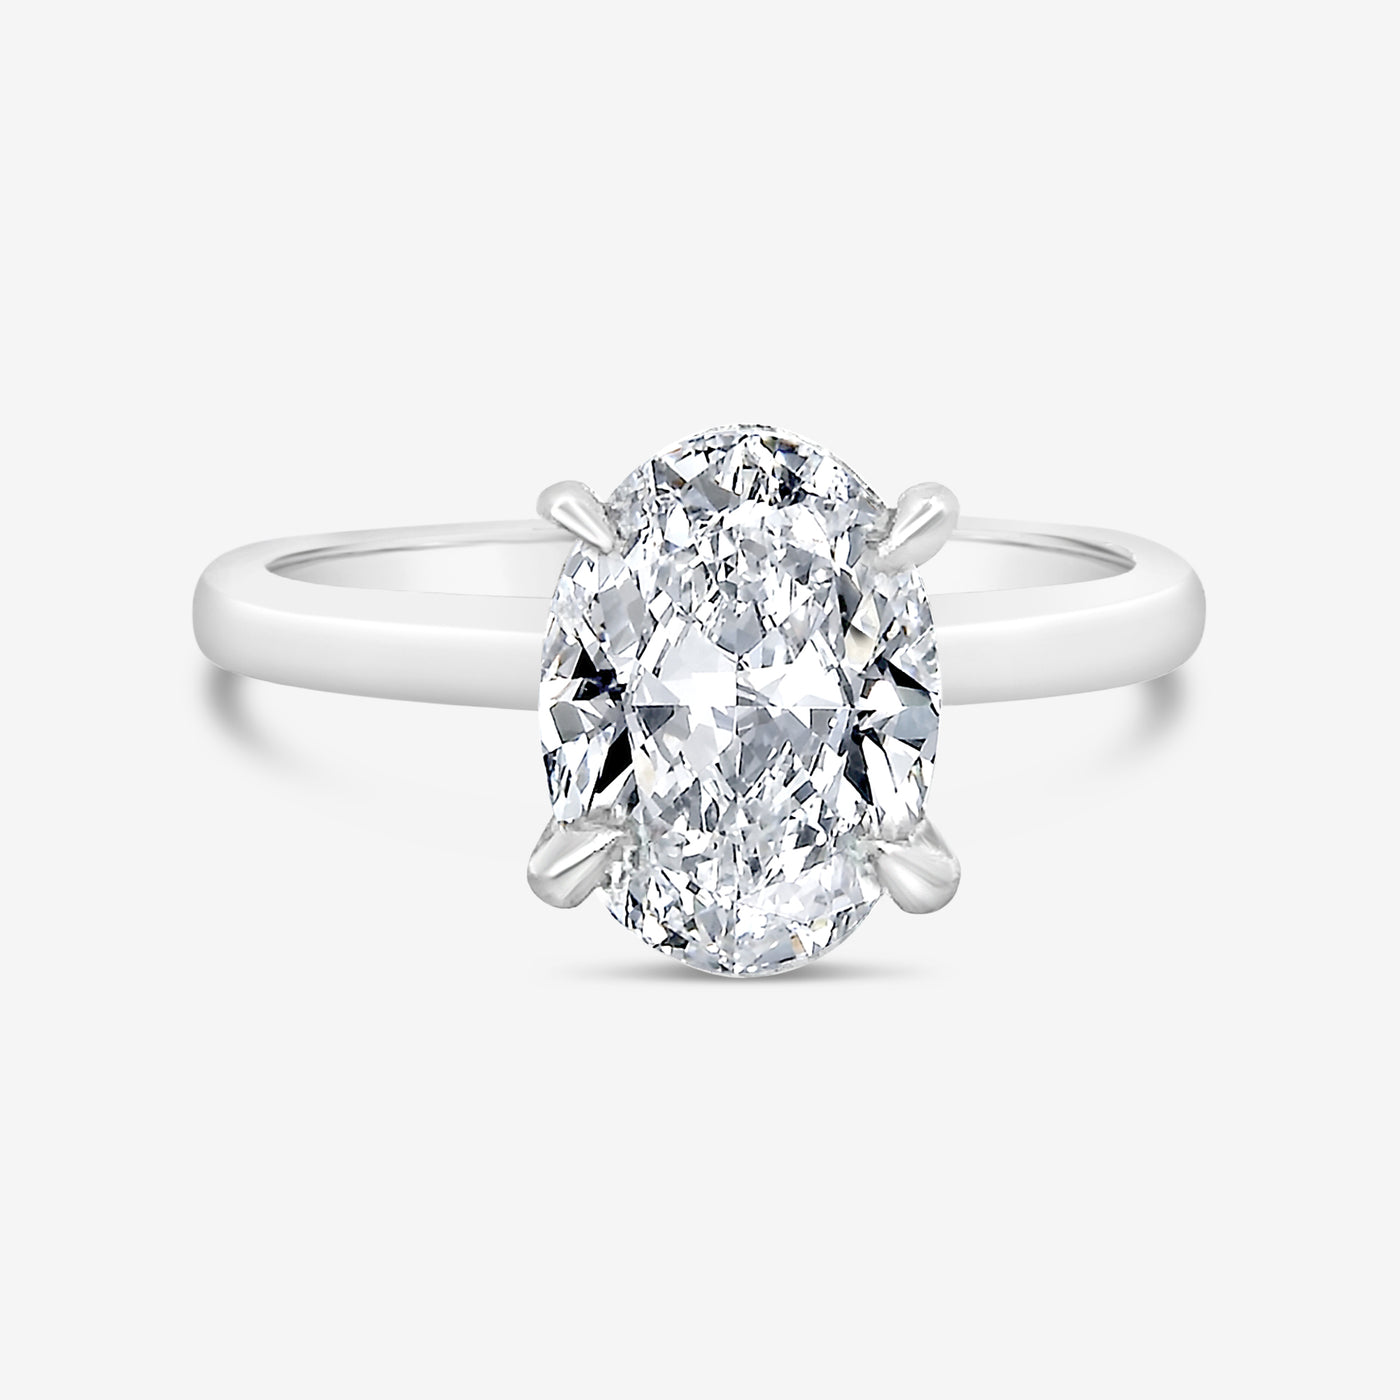 2.5v carat oval cut diamond engagement ring